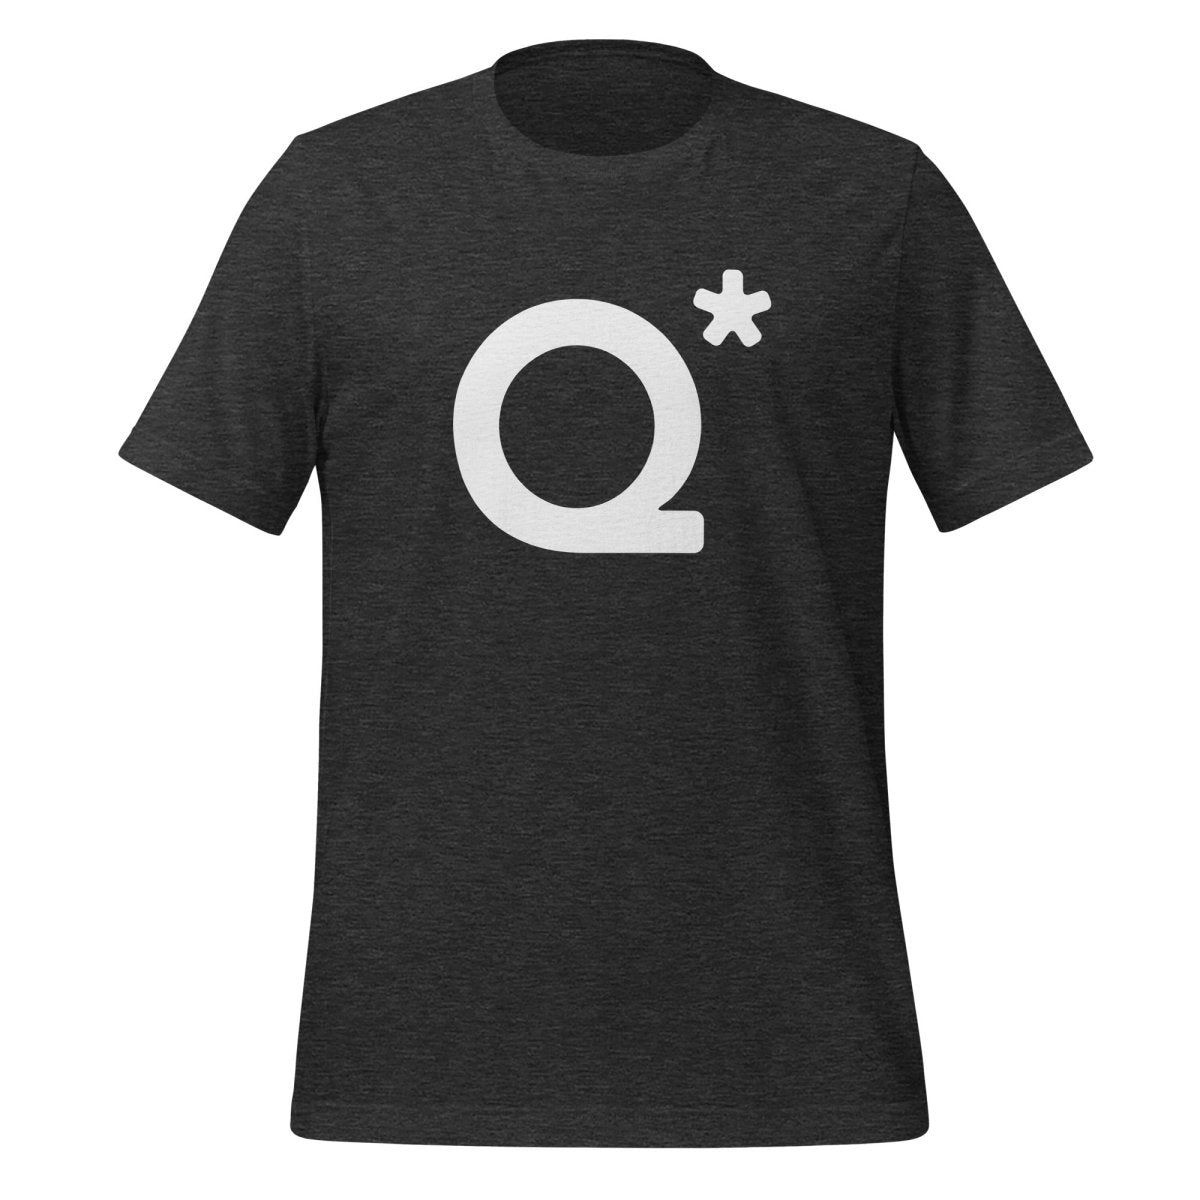 Q* (Q - Star) T - Shirt 1 (unisex) - Dark Grey Heather - AI Store